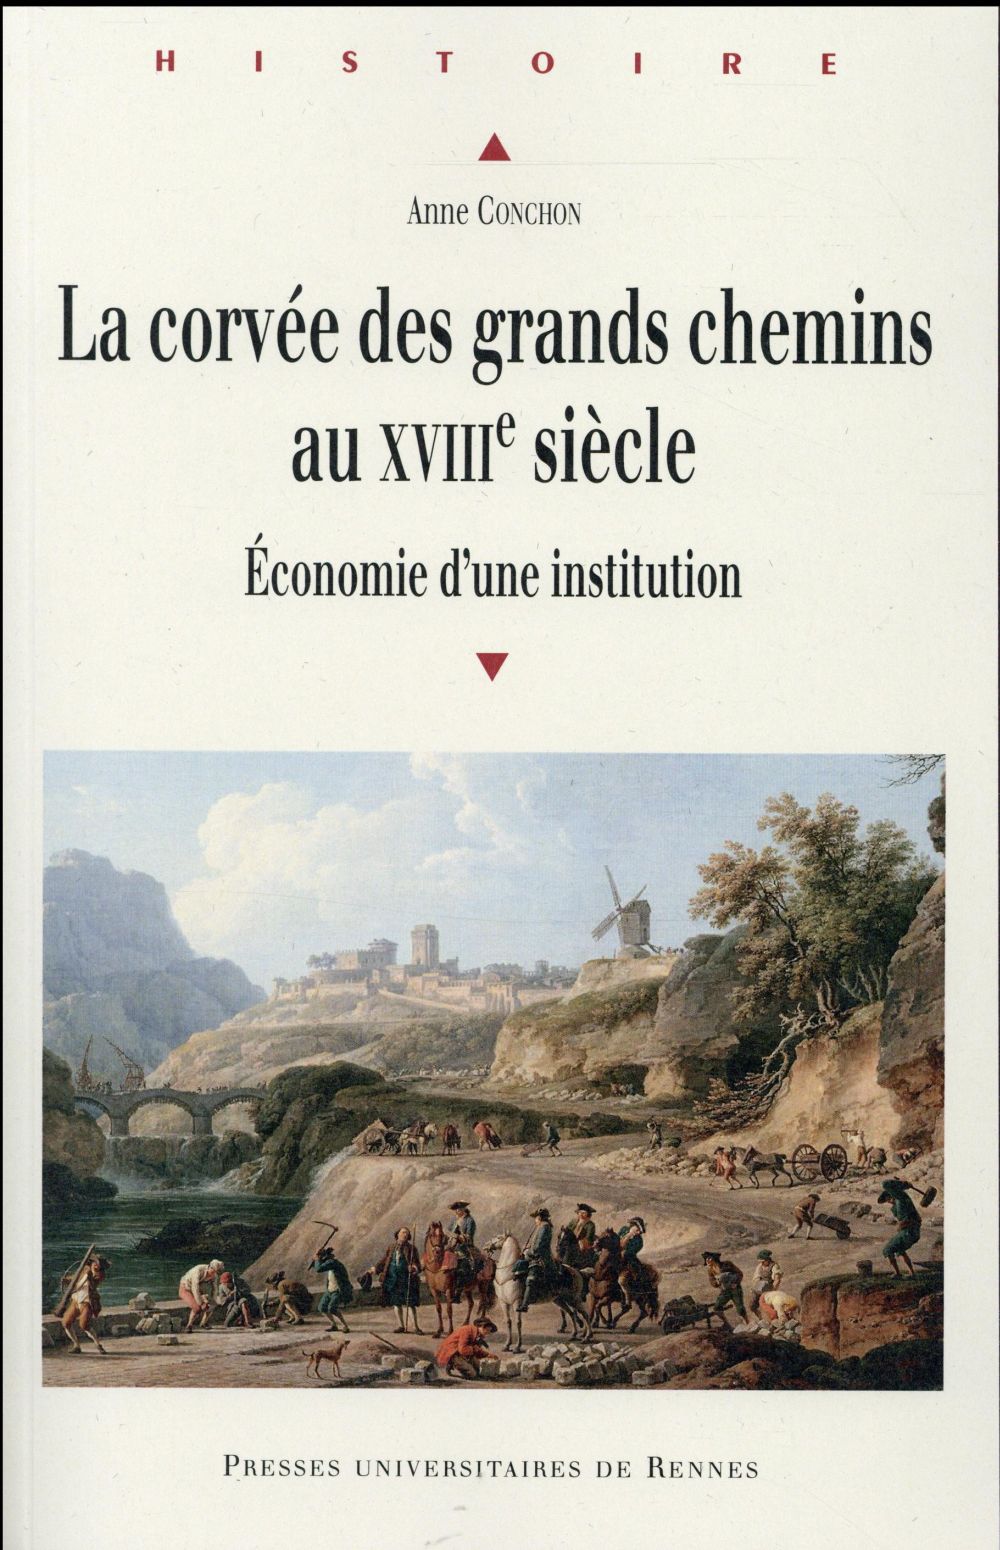 CORVEE DES GRANDS CHEMINS AU XVIIIE SIECLE